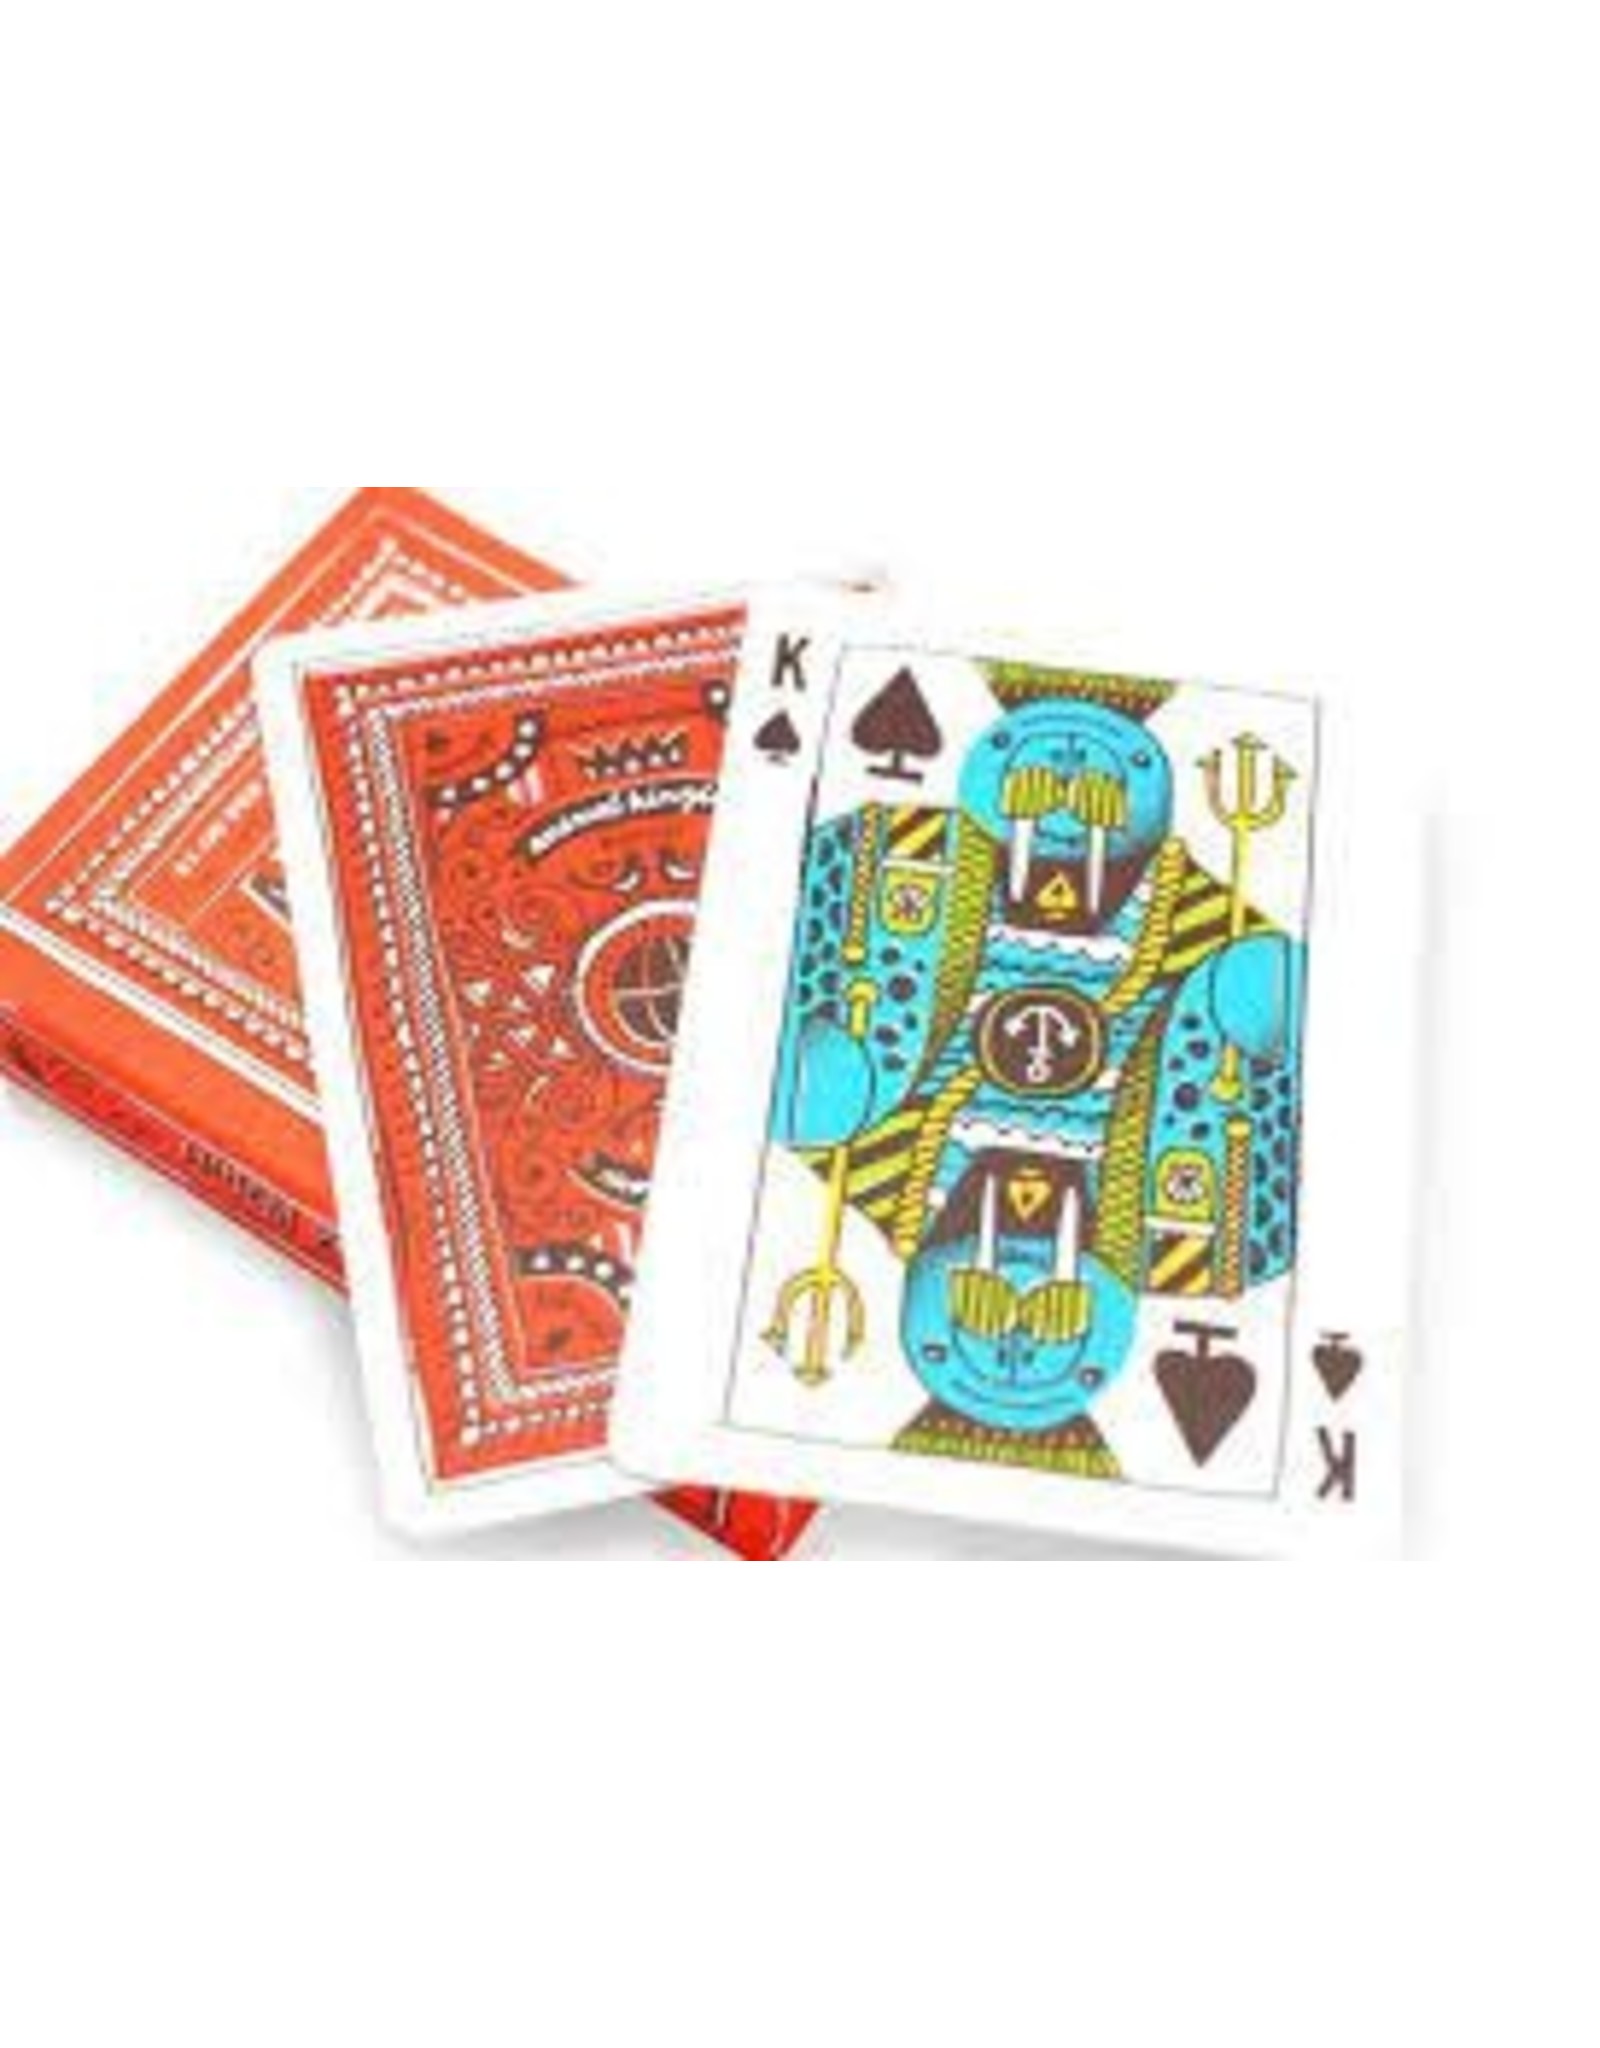 Theory 11 Playing Cards: Animal Kingdom